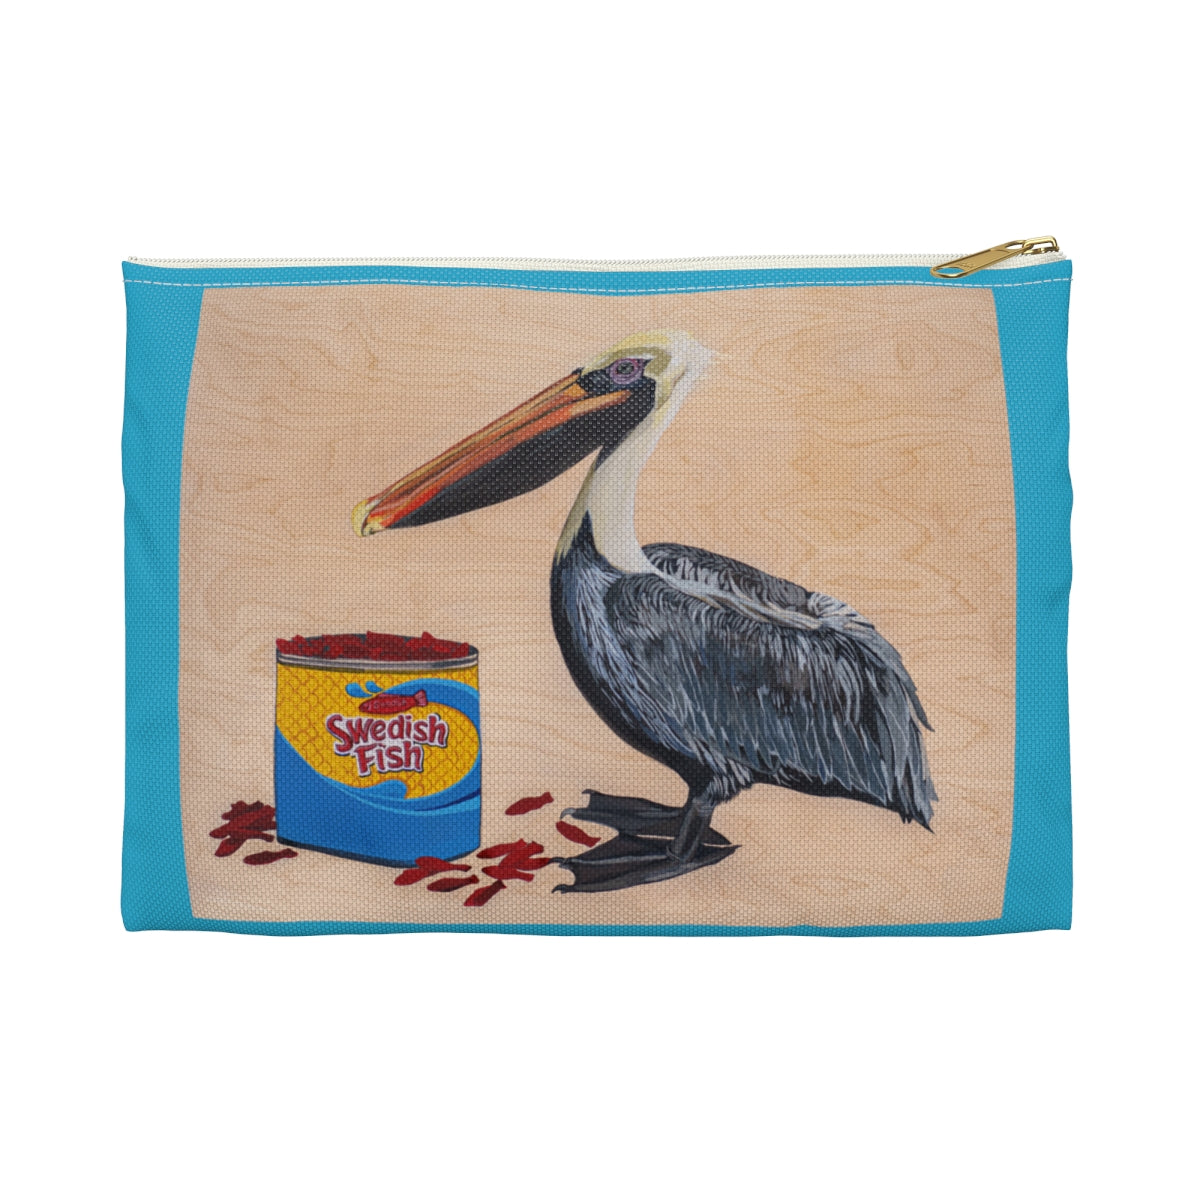 Gone Fishin' Zip Pelican Bag accessory bag Flyn_Costello_Art   